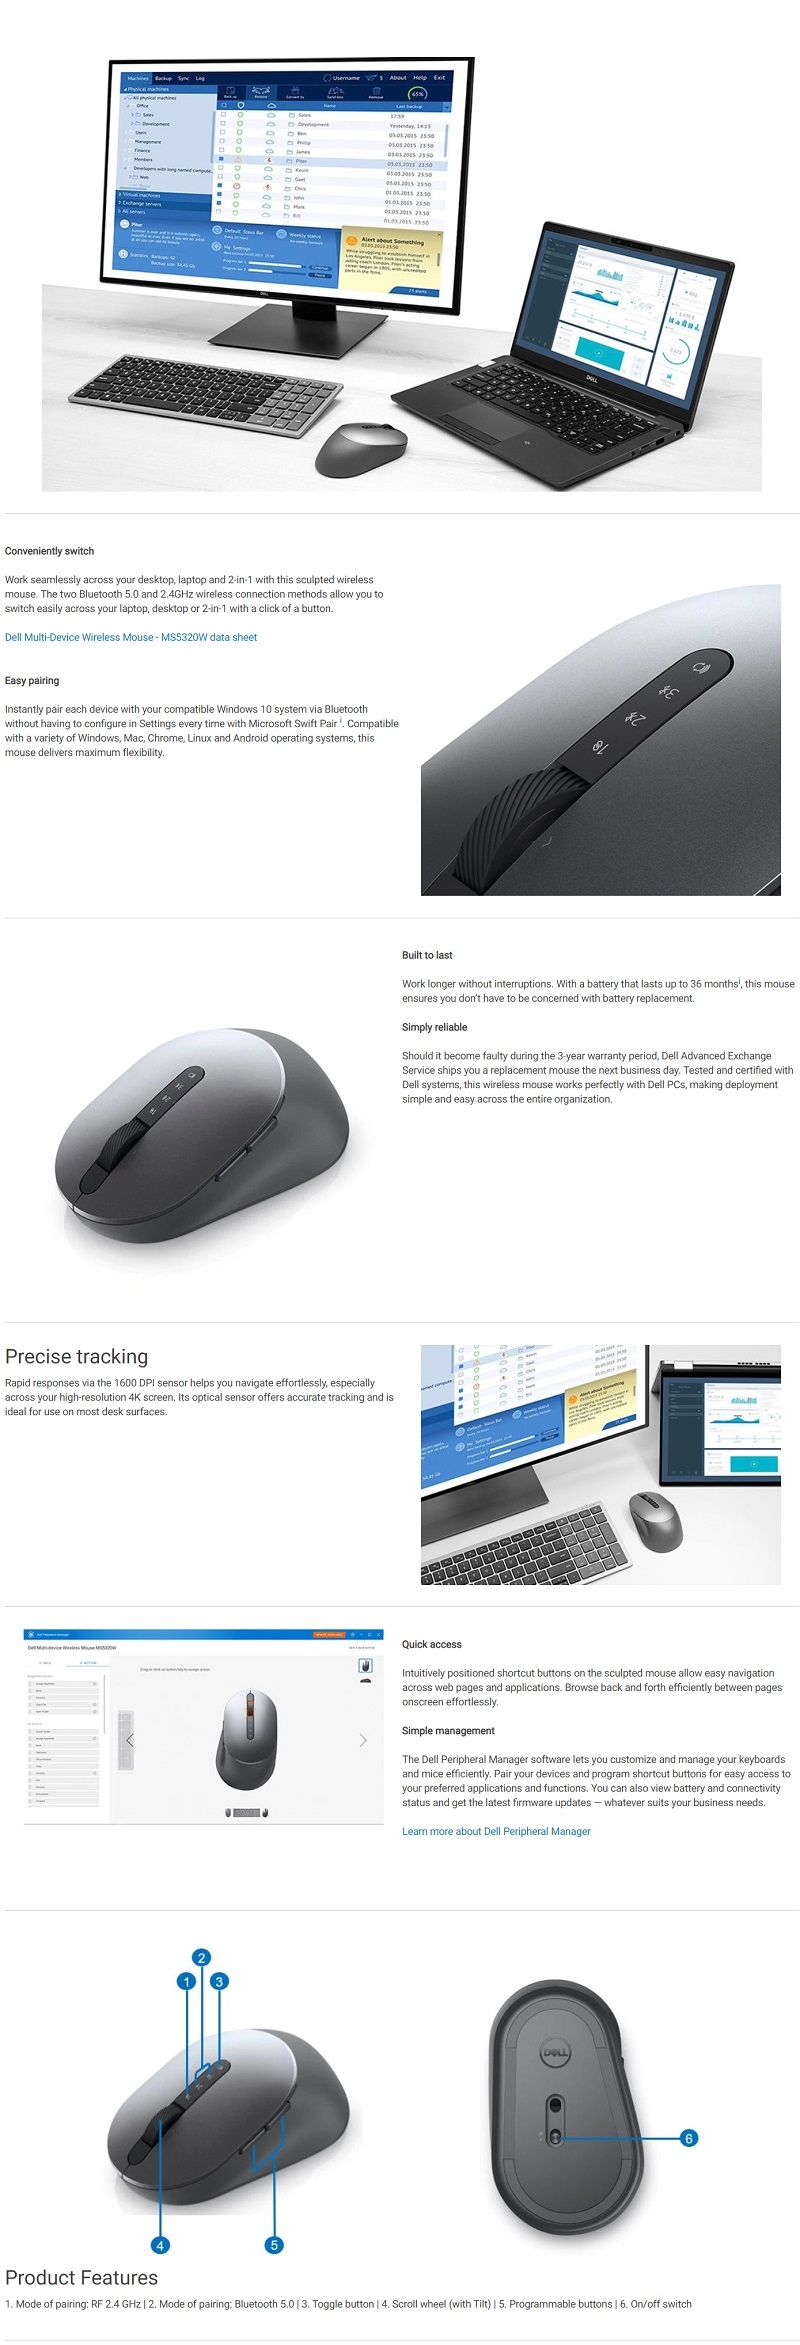 Dell Multi-Device Wireless Mouse Ms5320W (570-Abdp)